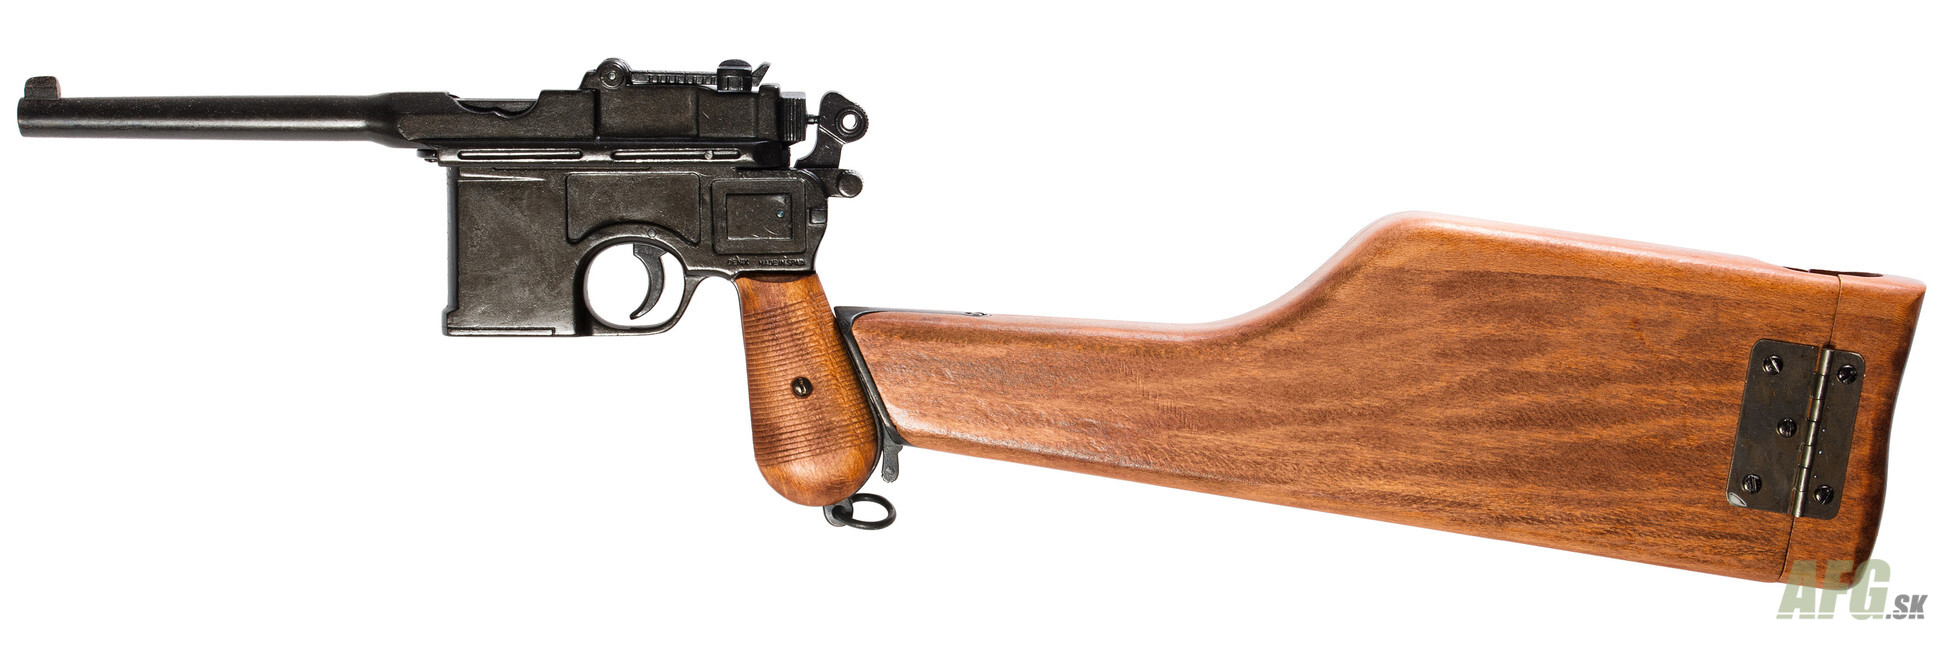 1914 german mauser rifle